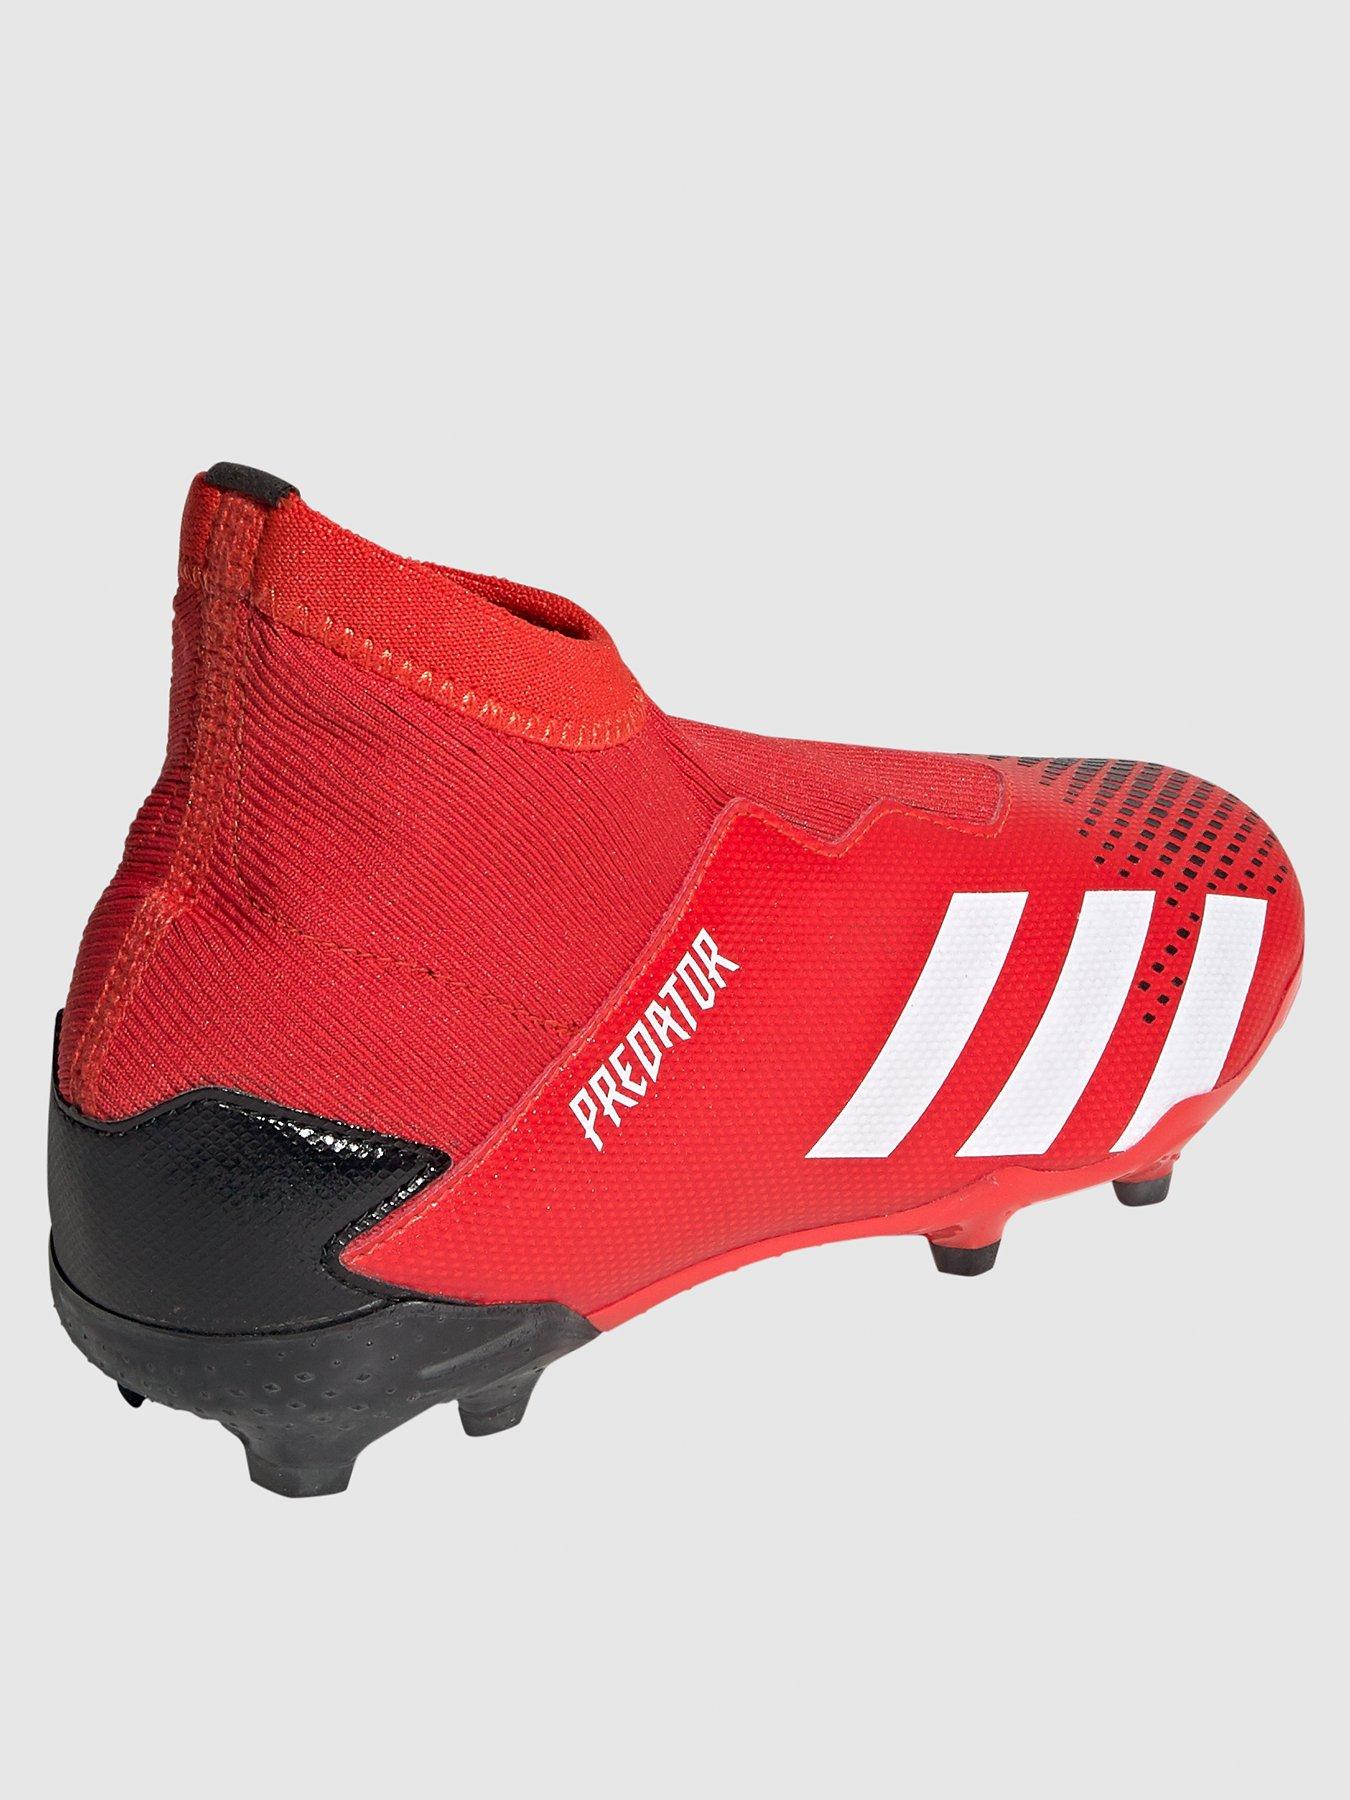 red predator boots